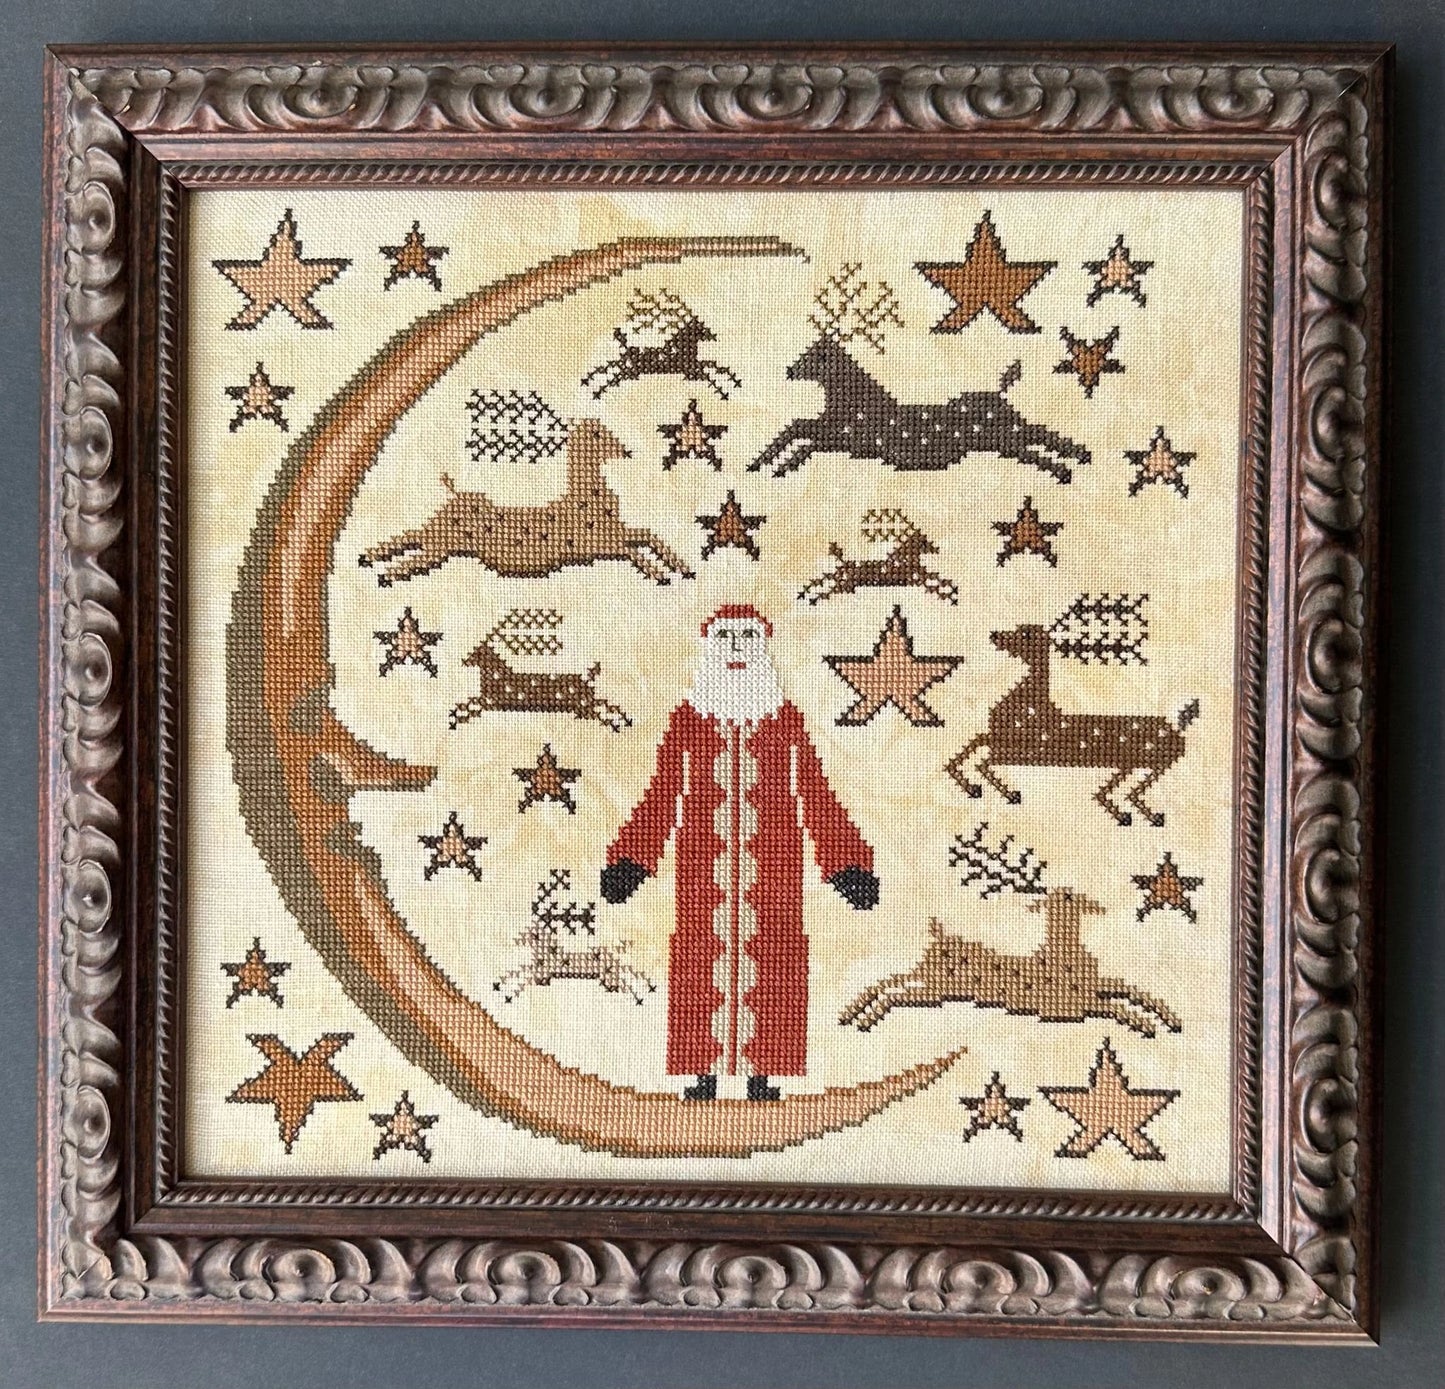 Deer Santa Cross Stitch Pattern Kathy Barrick PHYSICAL copy